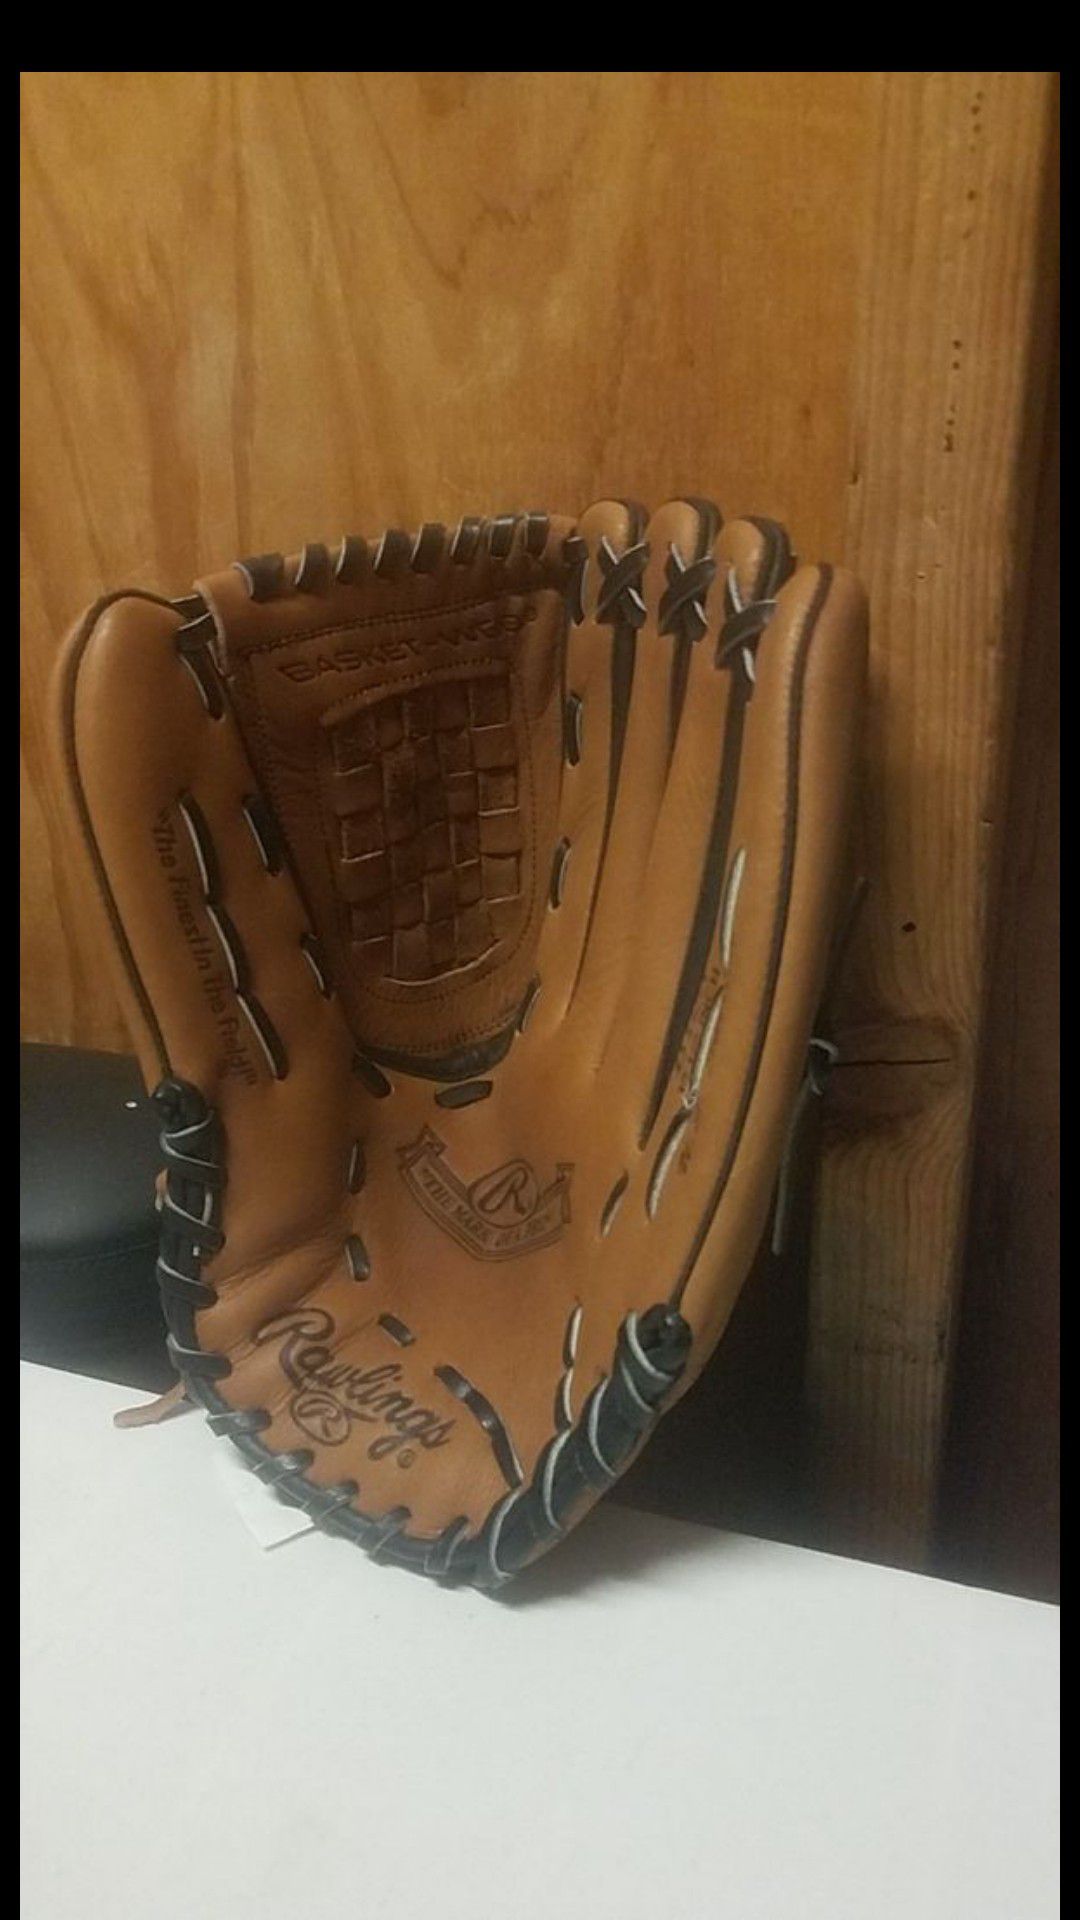 Rawlings softball glove, 12.5"